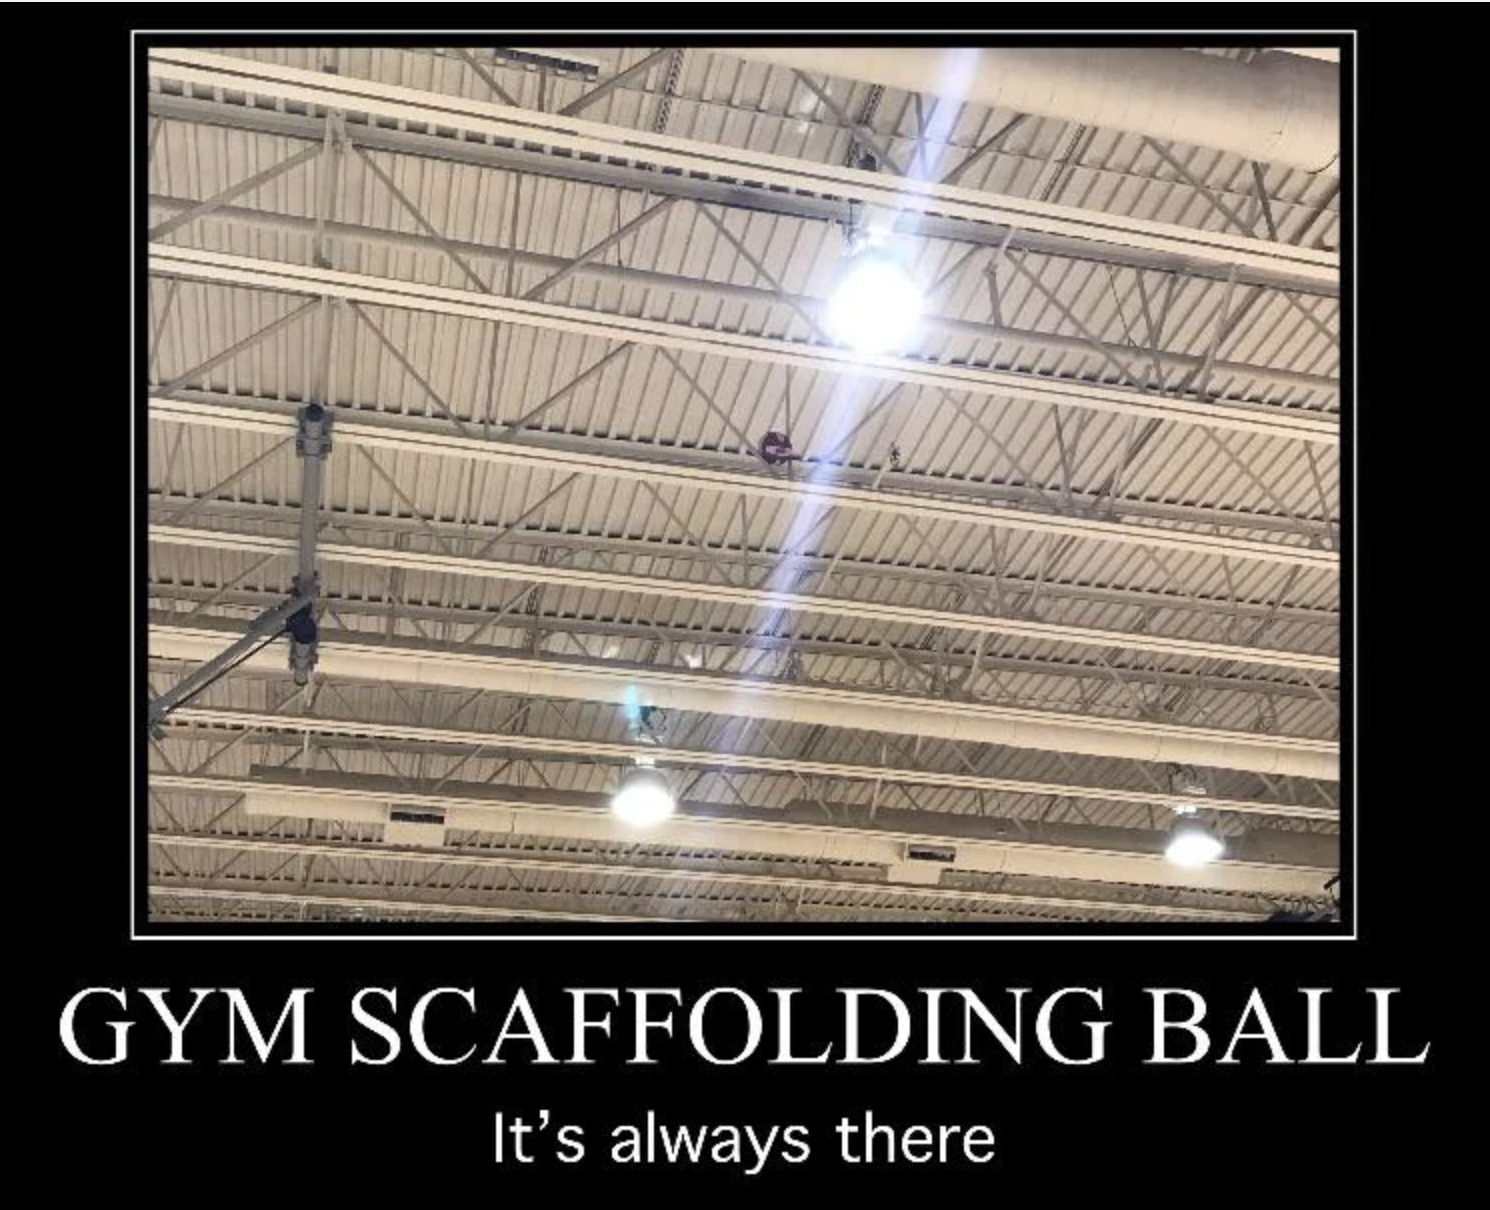 Ball stuck in scaffolding